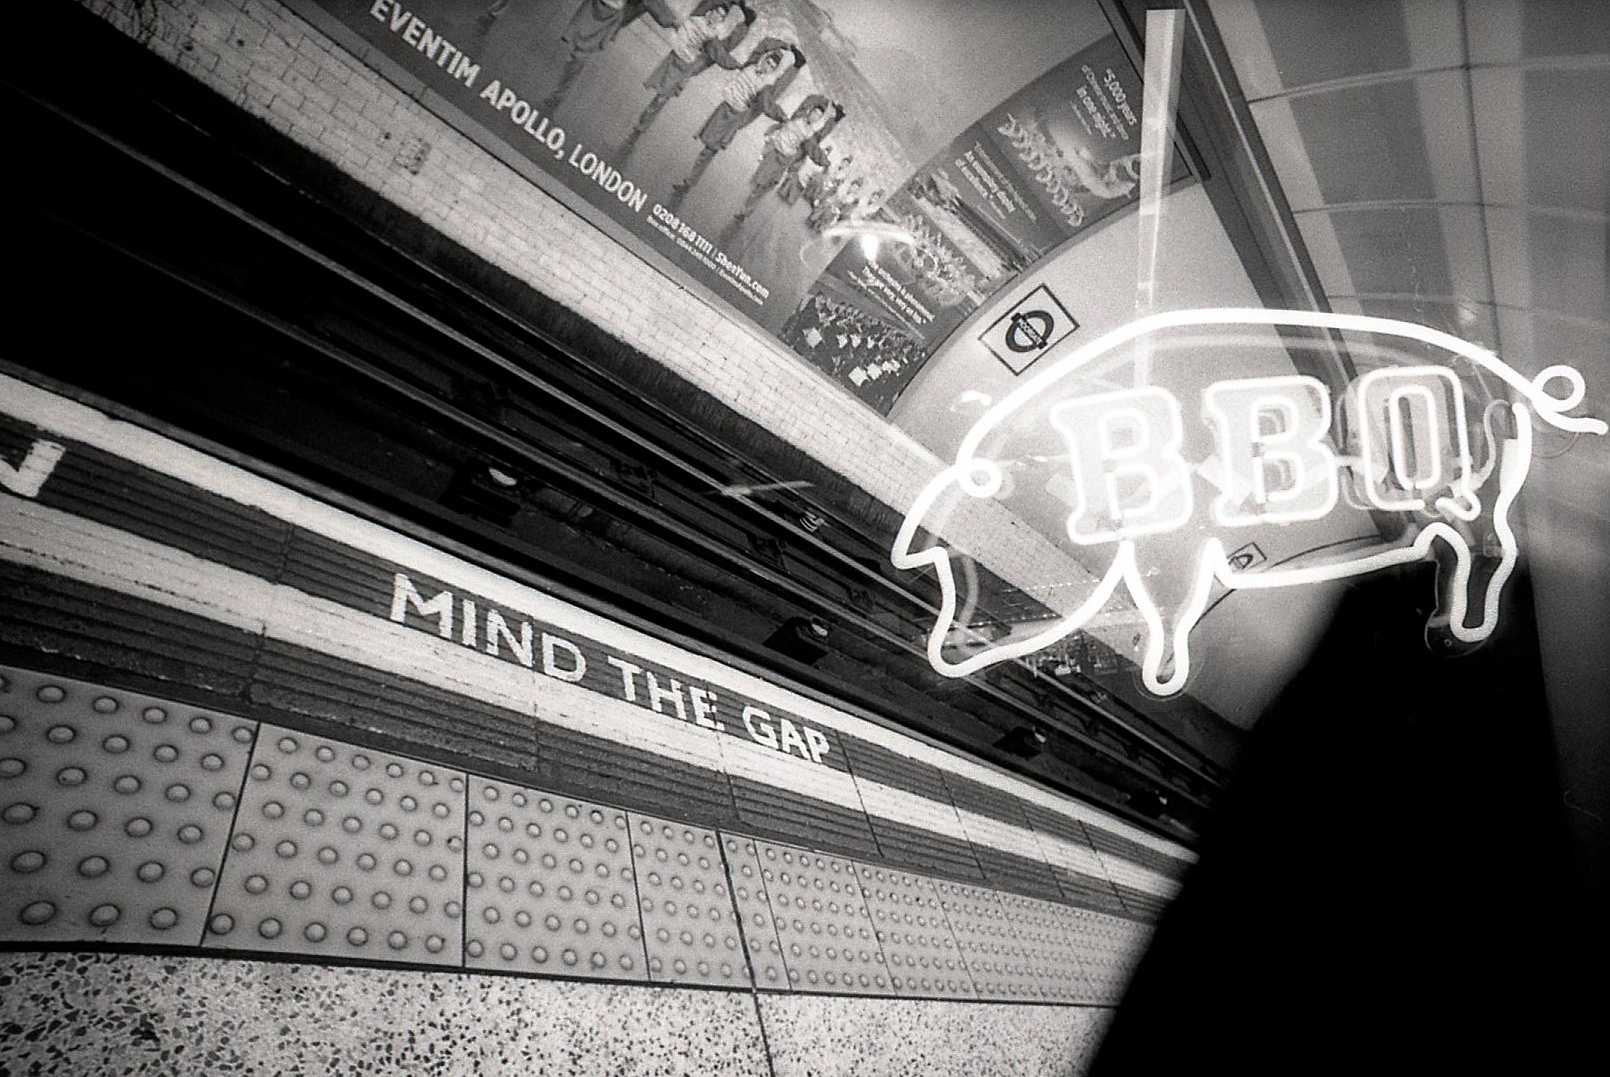 BBQ sign and Tube station platform (Pic: Caroline Mills)